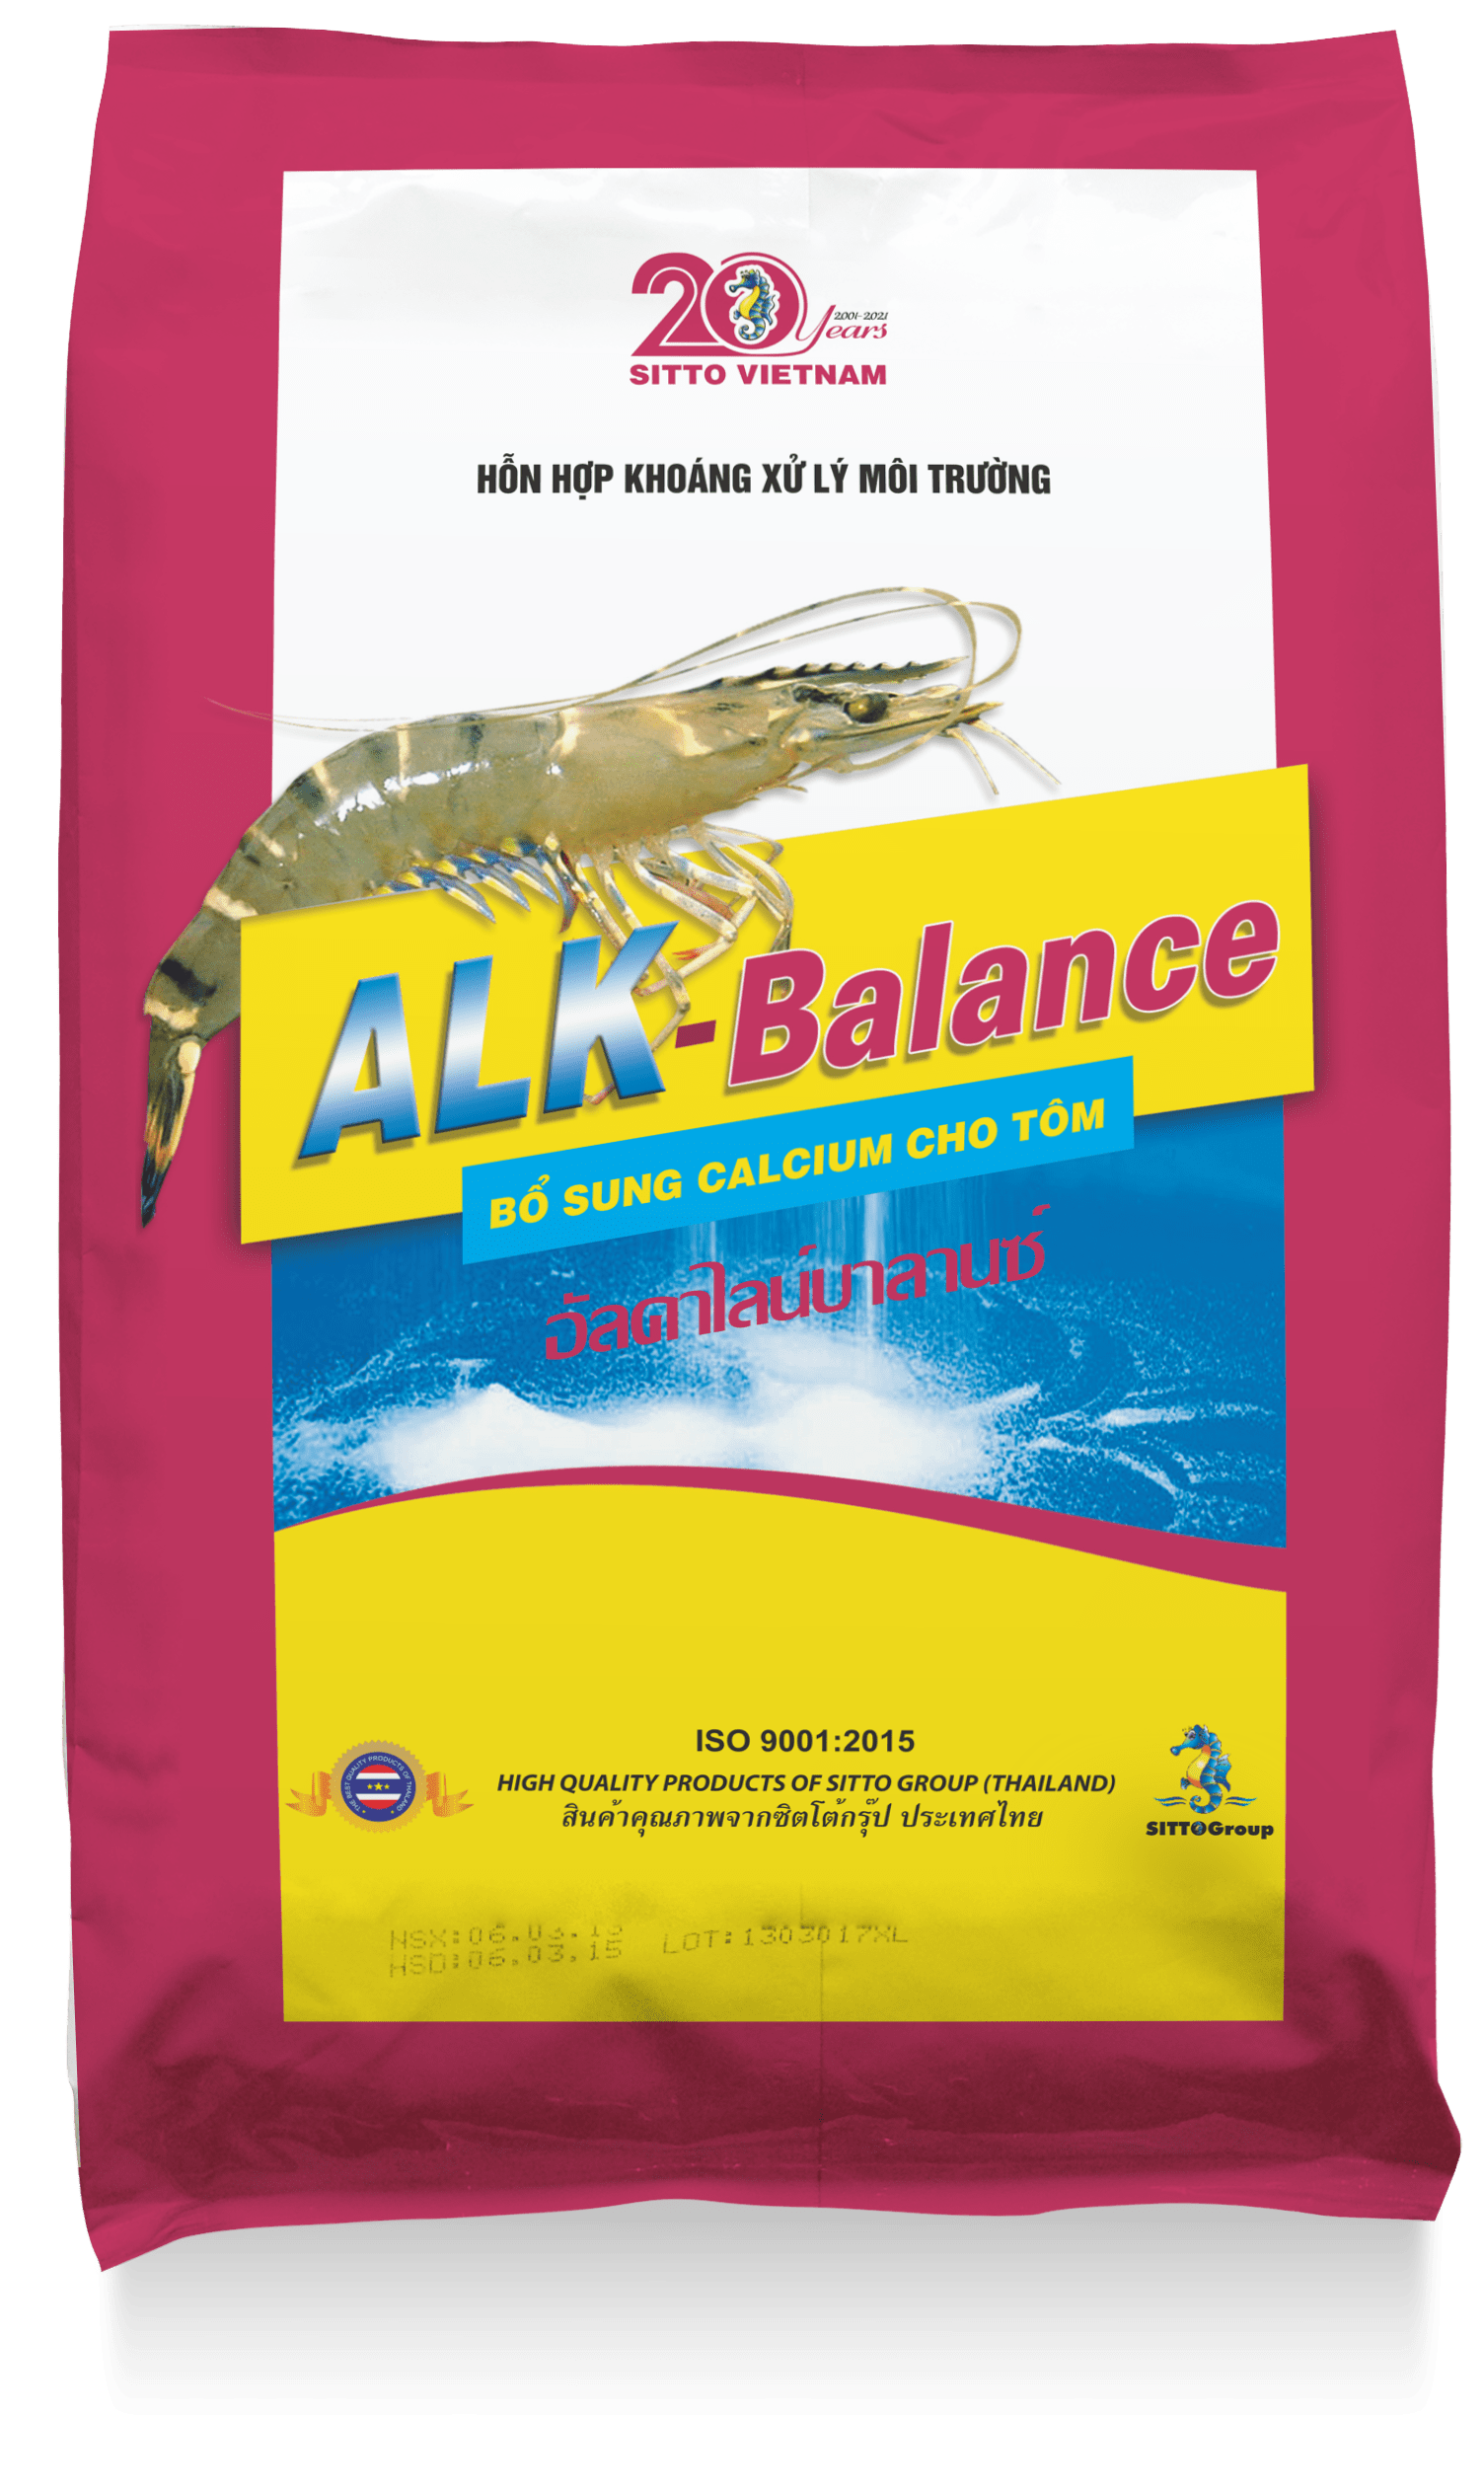 ALK - Balance bổ sung Calcium cho Tôm